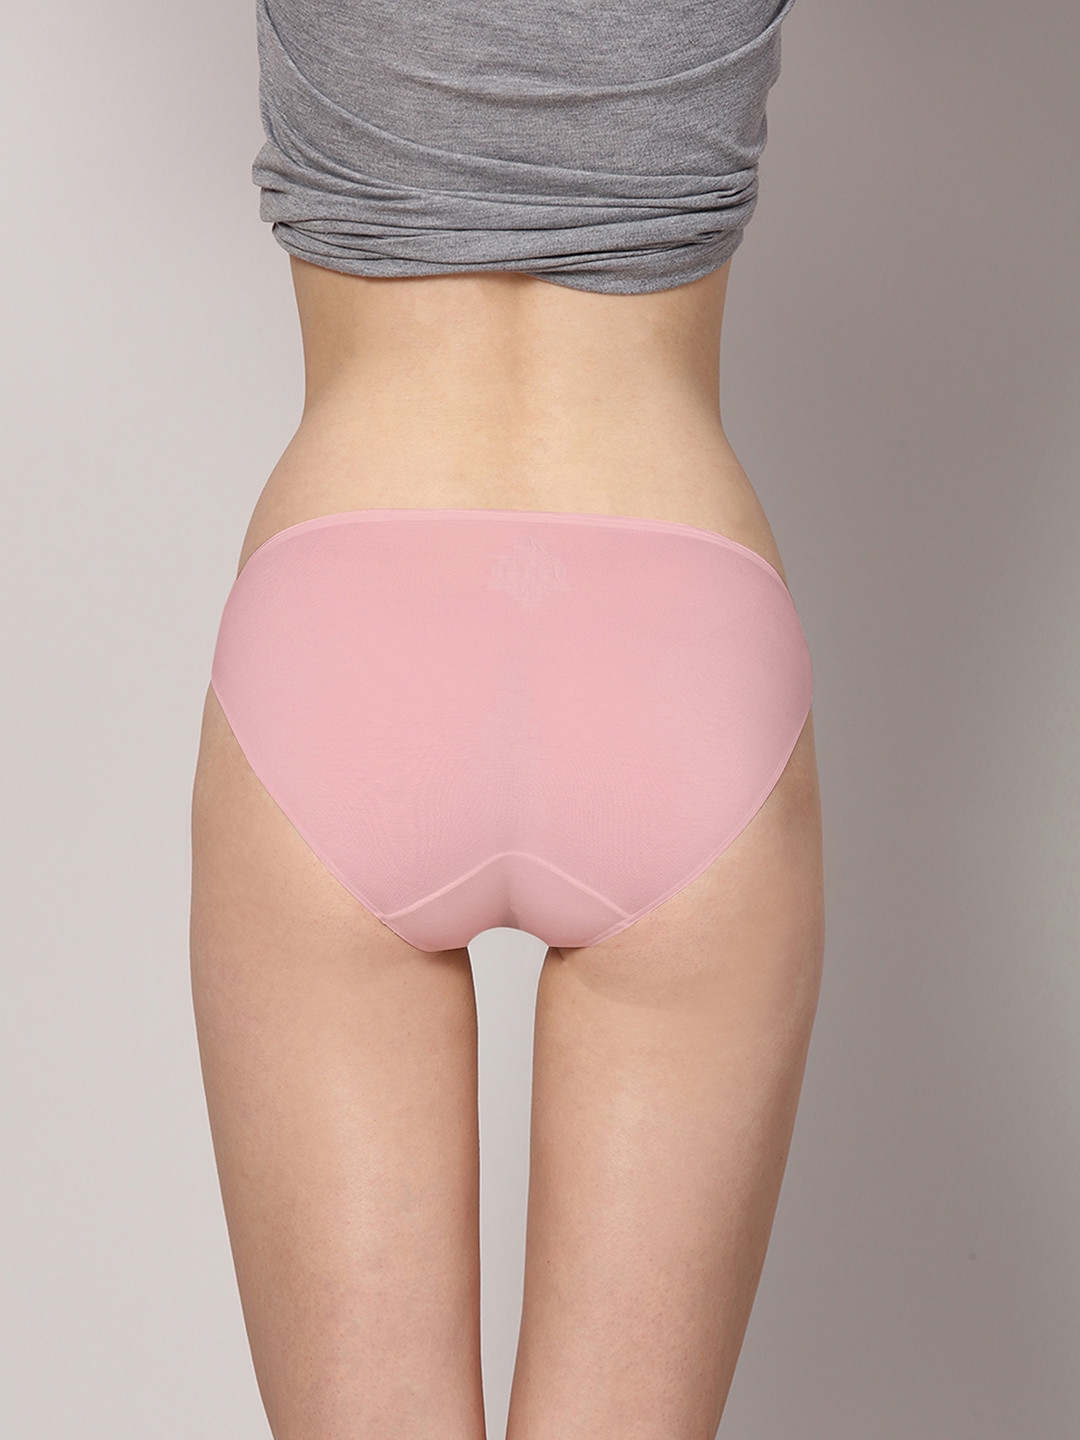 AshleyandAlvis | AshleyandAlvis Women's Panties Micro Modal, Anti Bacterial, Skinny Soft, Premium Bikini-No Itching, Sweat Proof, Double In-seam Gusset 5